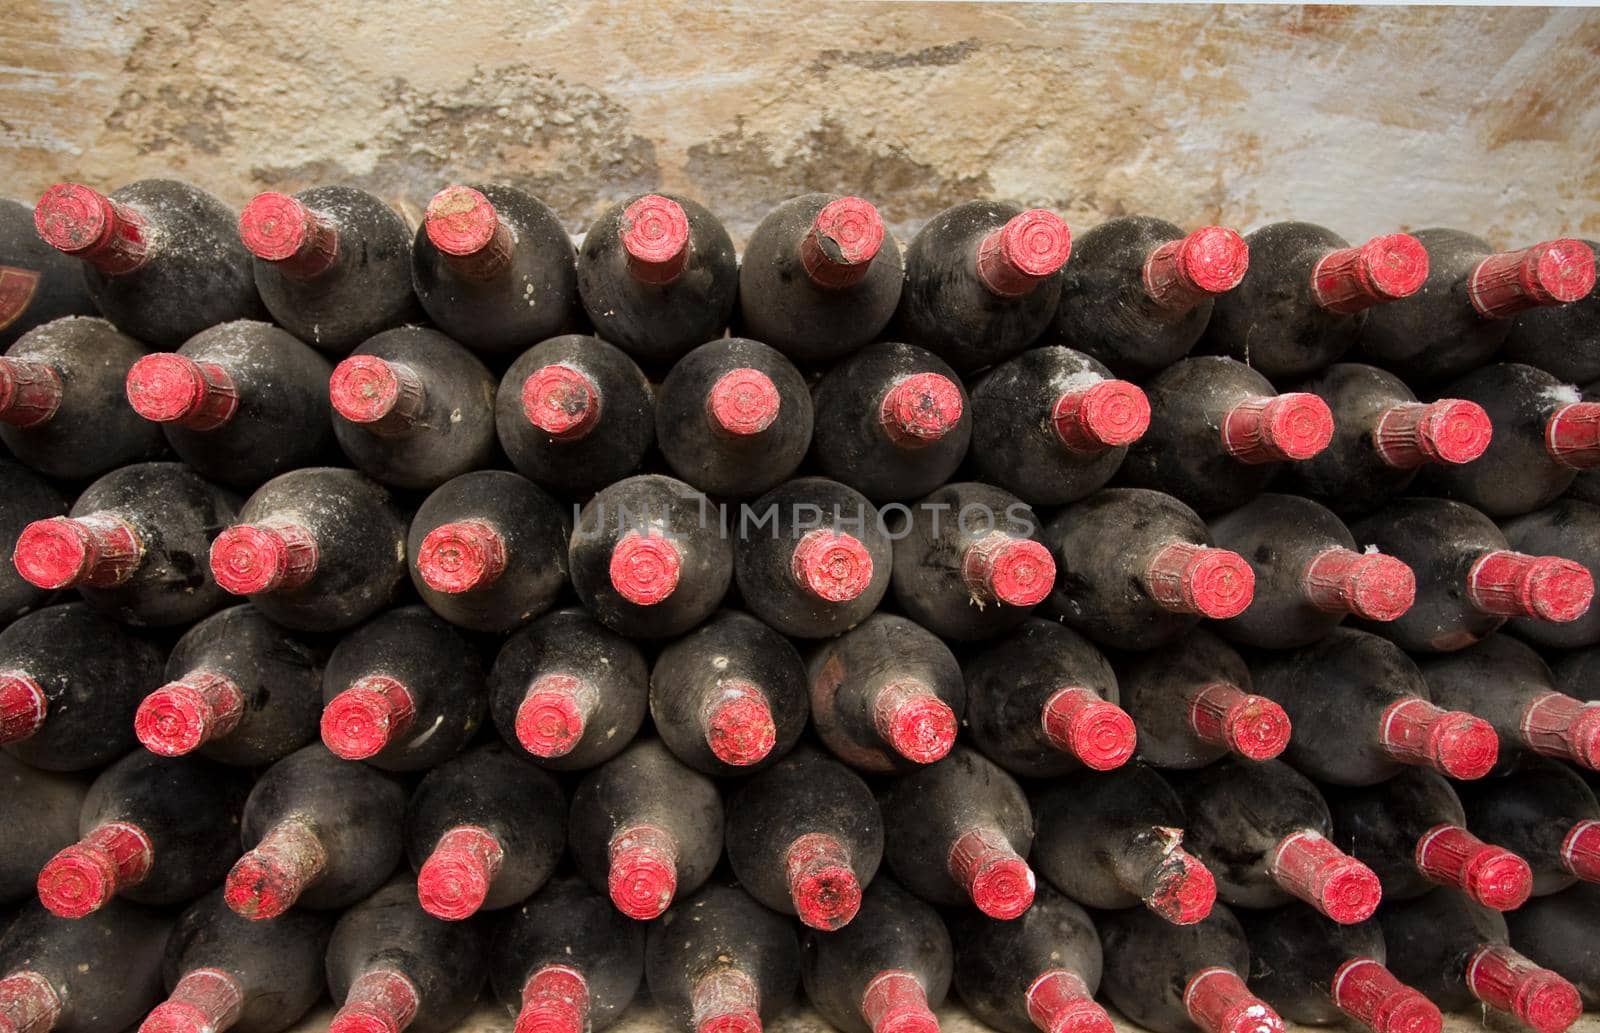 vineyard cellar with old bottles